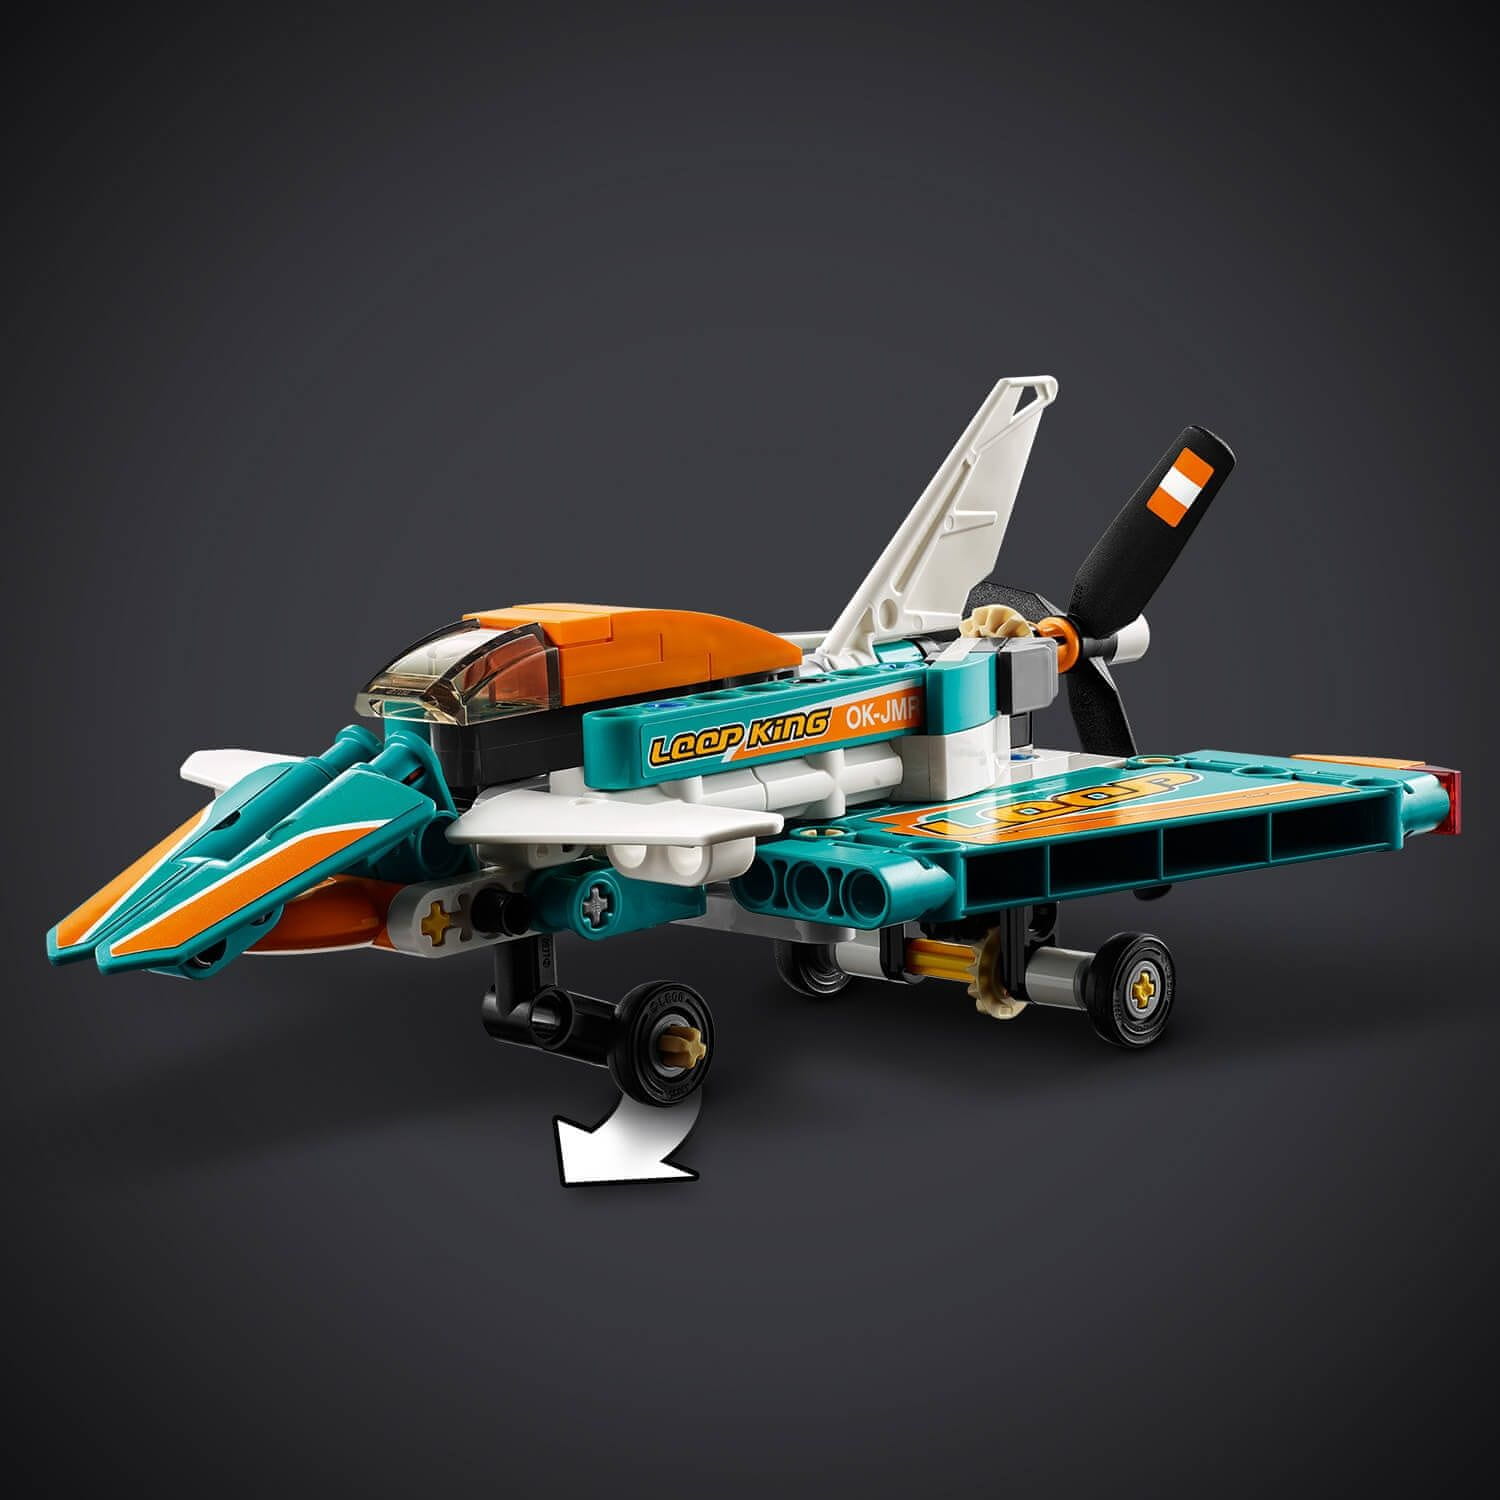 LEGO Technic 42117 Závodné lietadlo